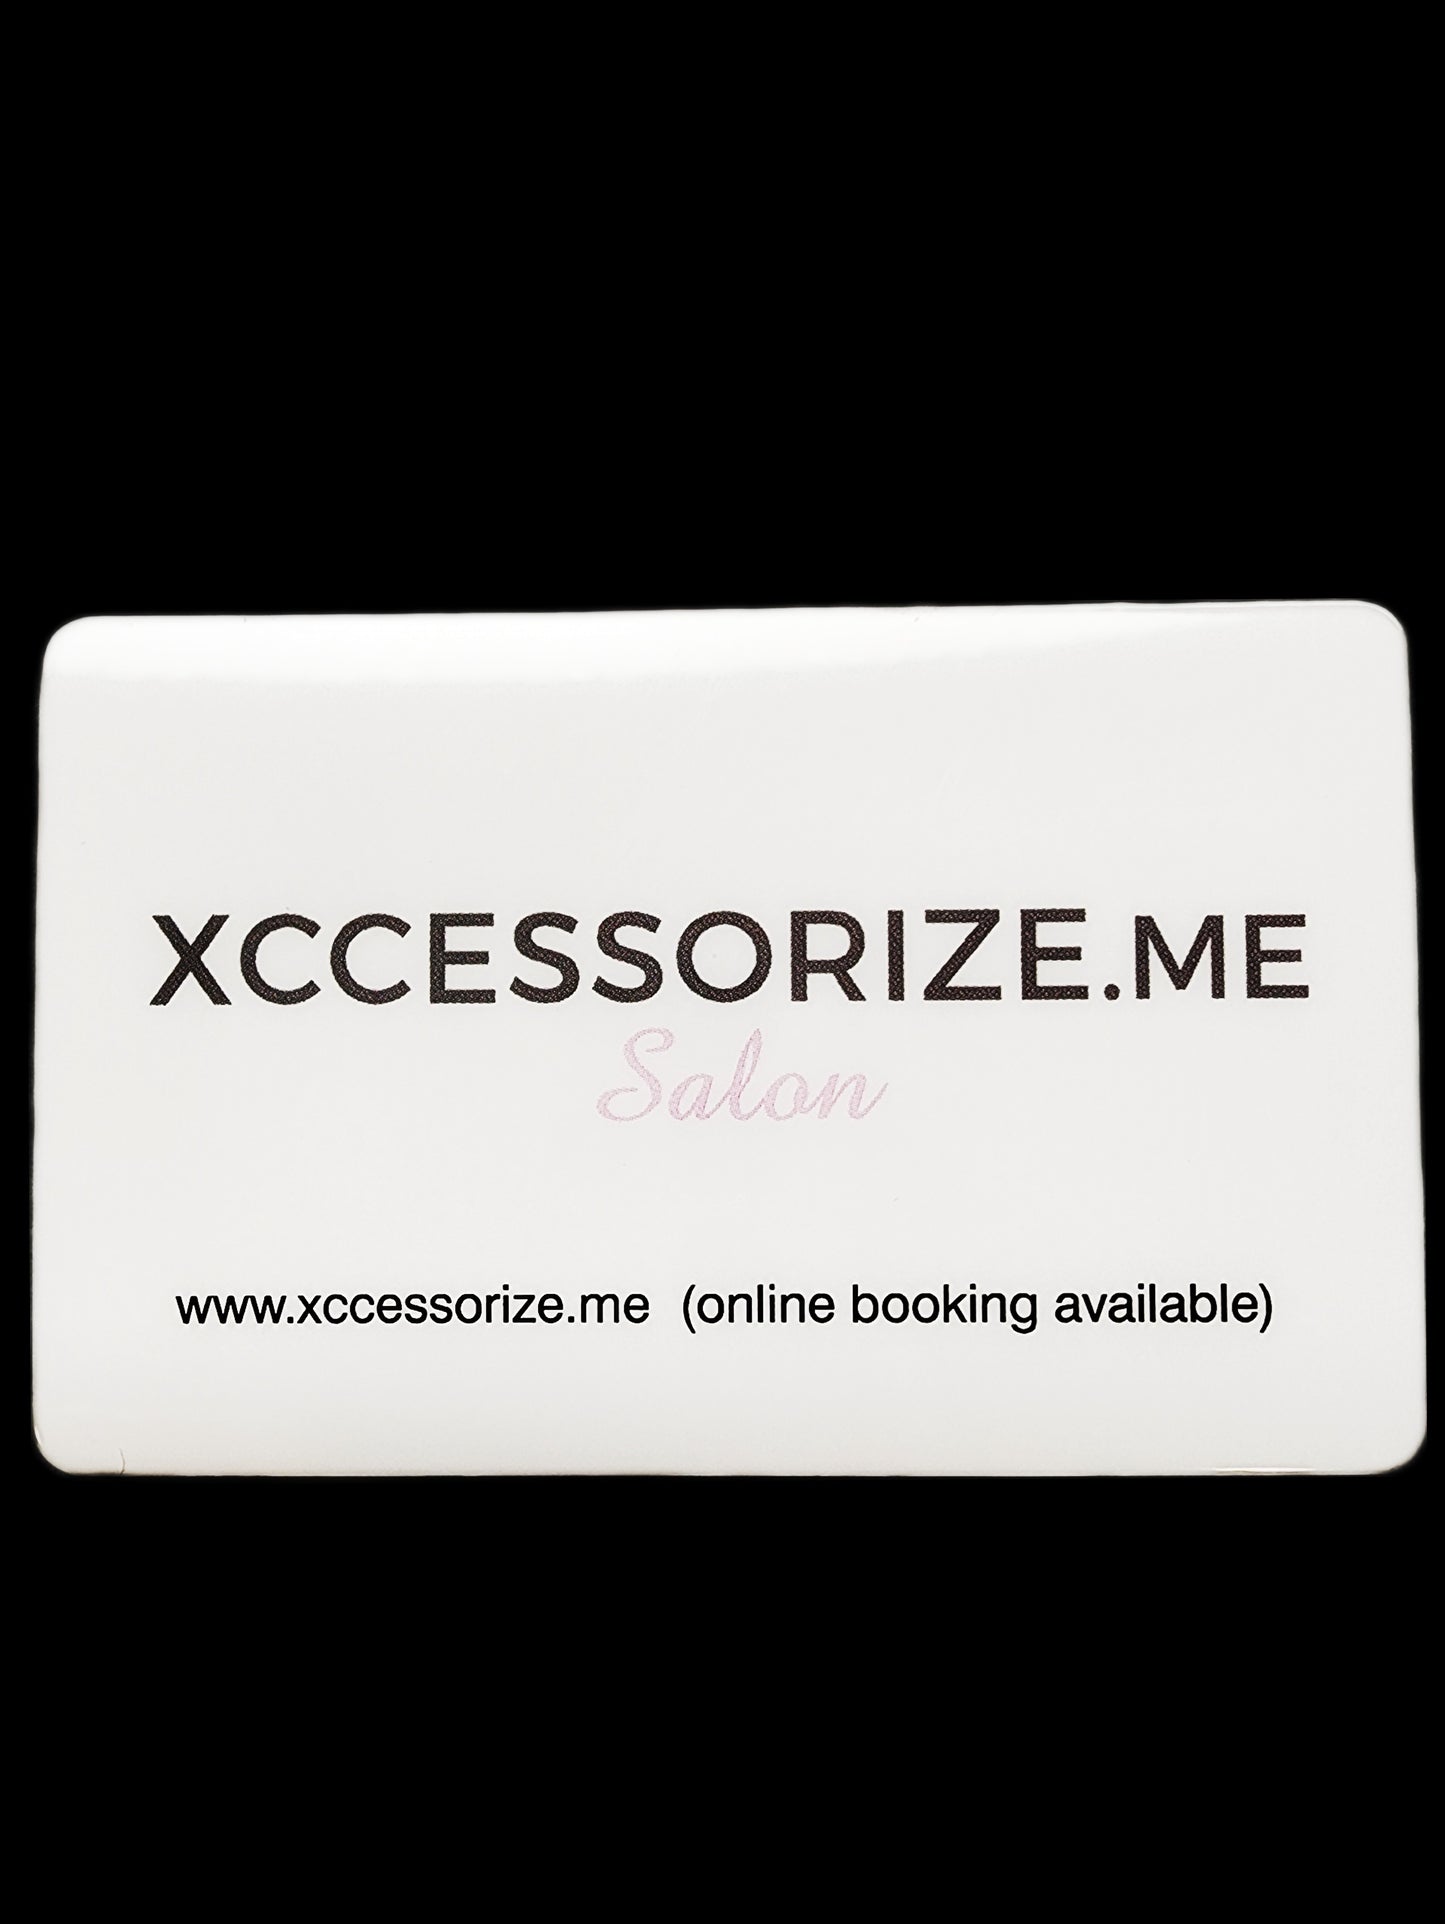 Xccessoirze.me Salon Gift Card